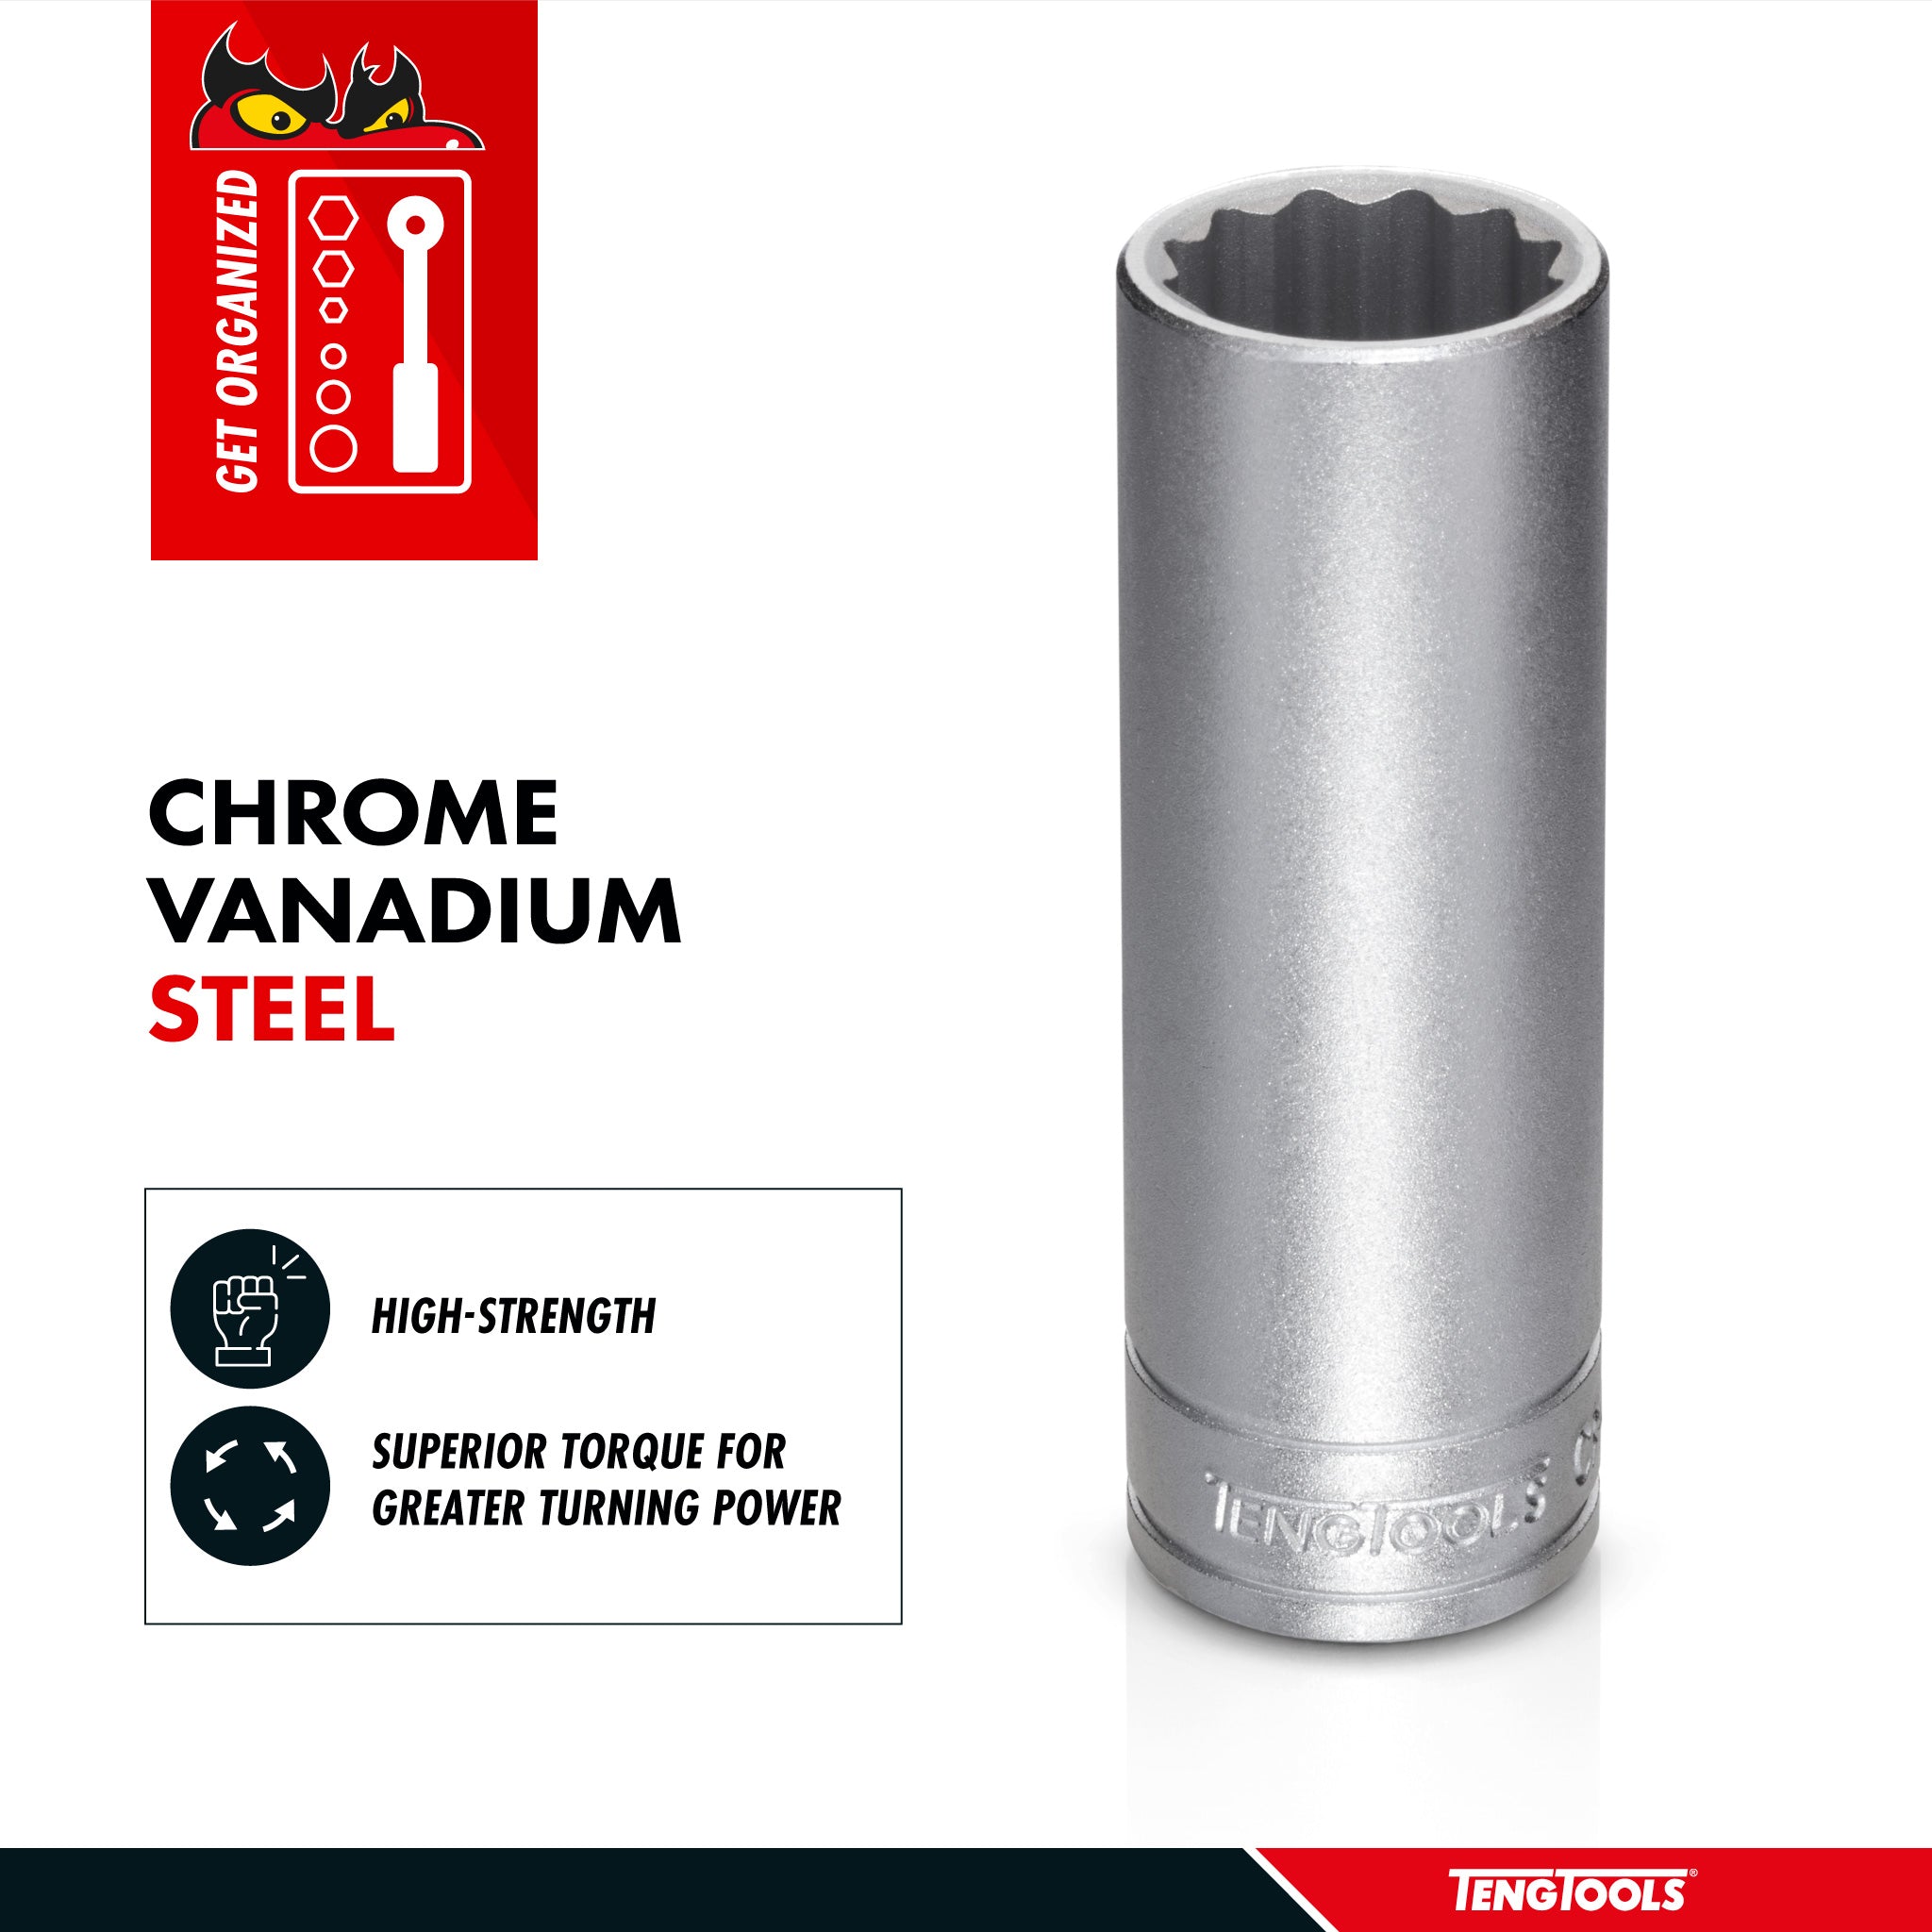 Teng Tools 1/2 Inch Drive 12 Point Metric Deep Chrome Vanadium Sockets - 11mm